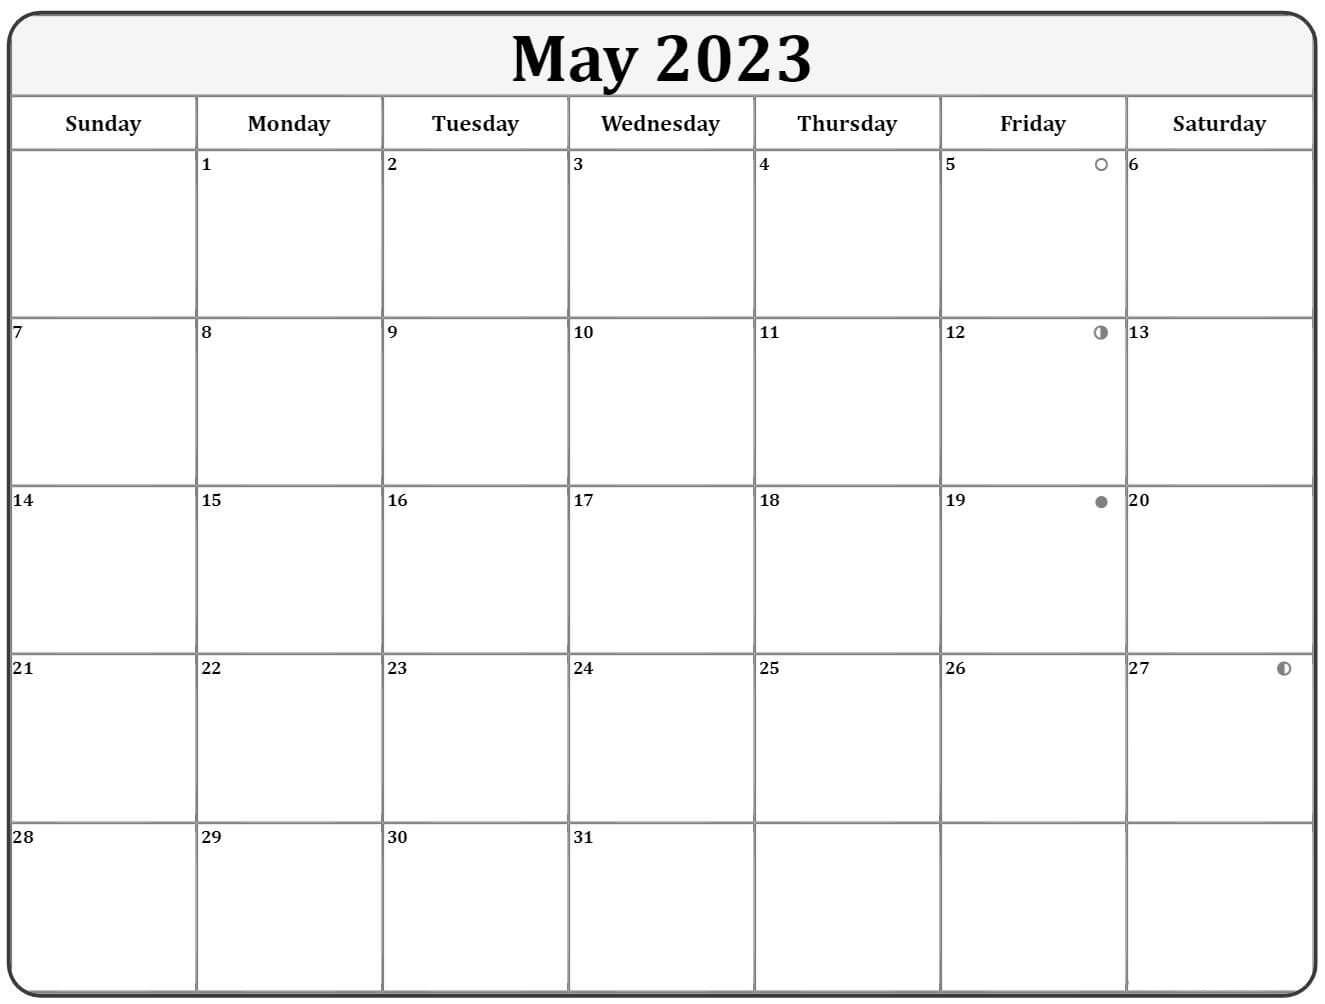 May 2023 Calendar Lunar Phases